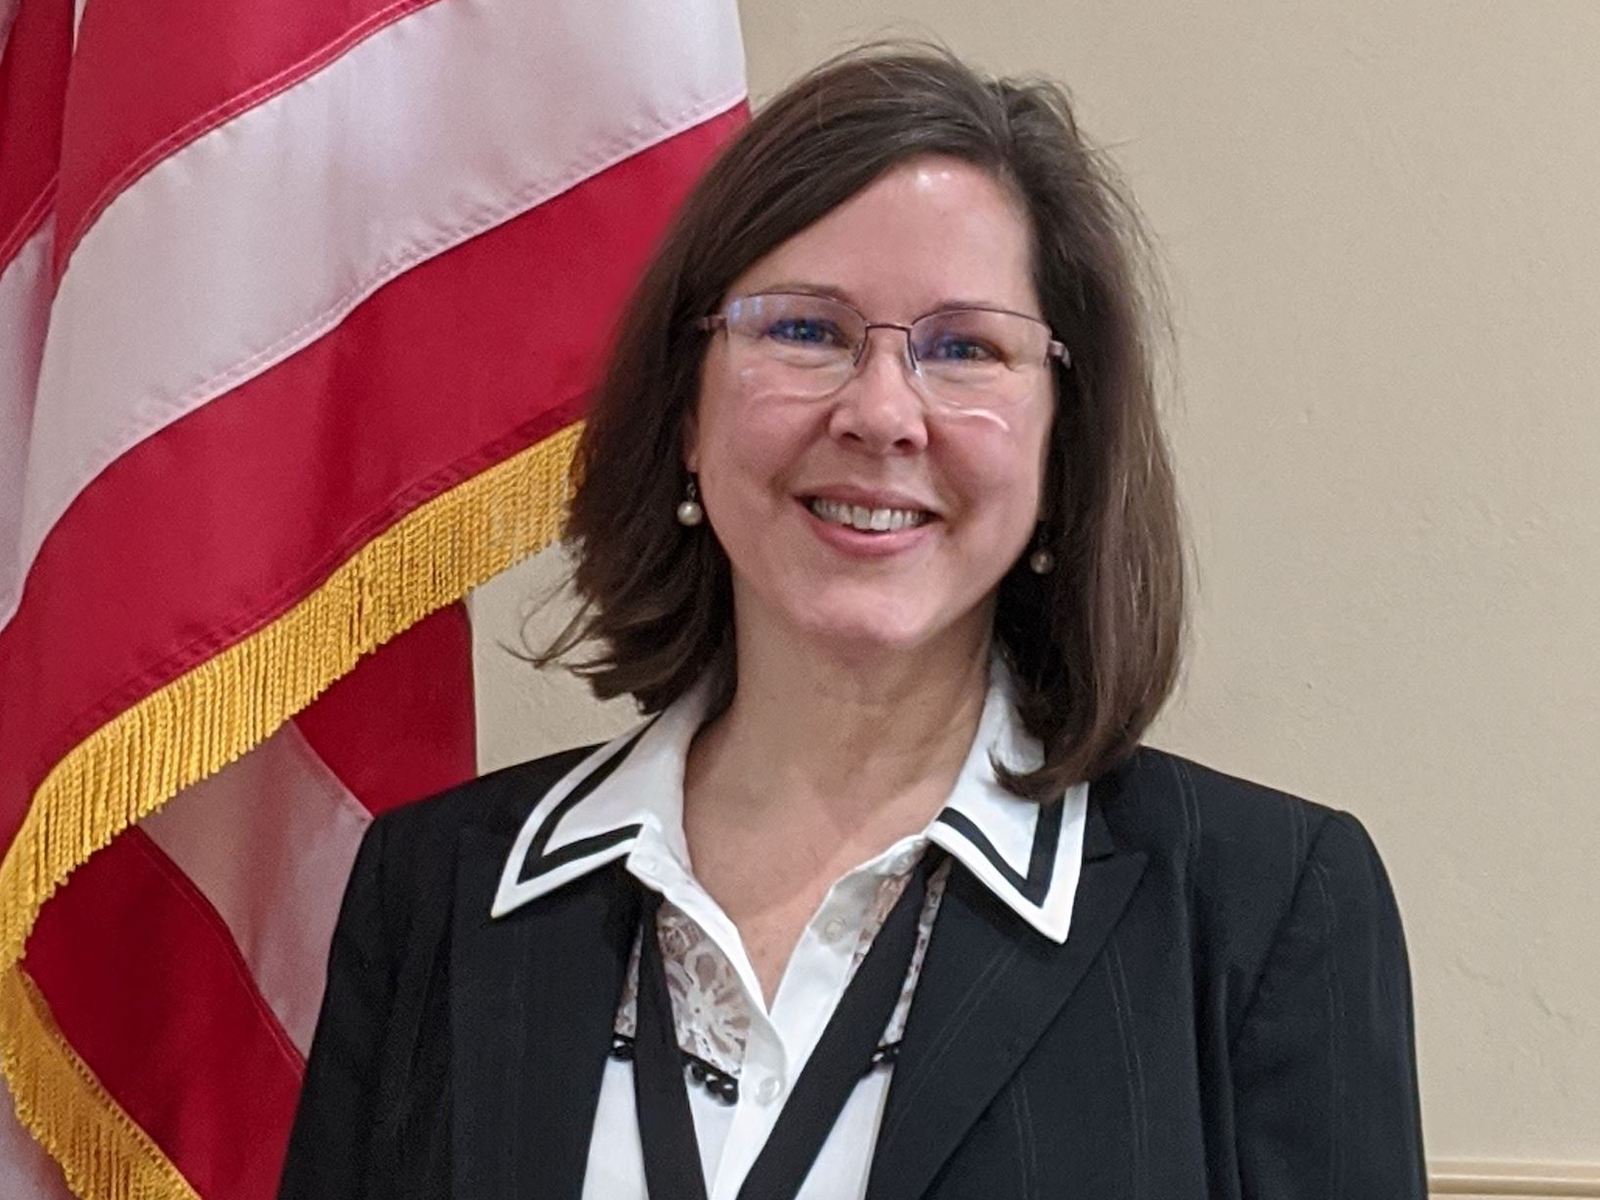 Wayne County Commissioner Jocelyn Cramer